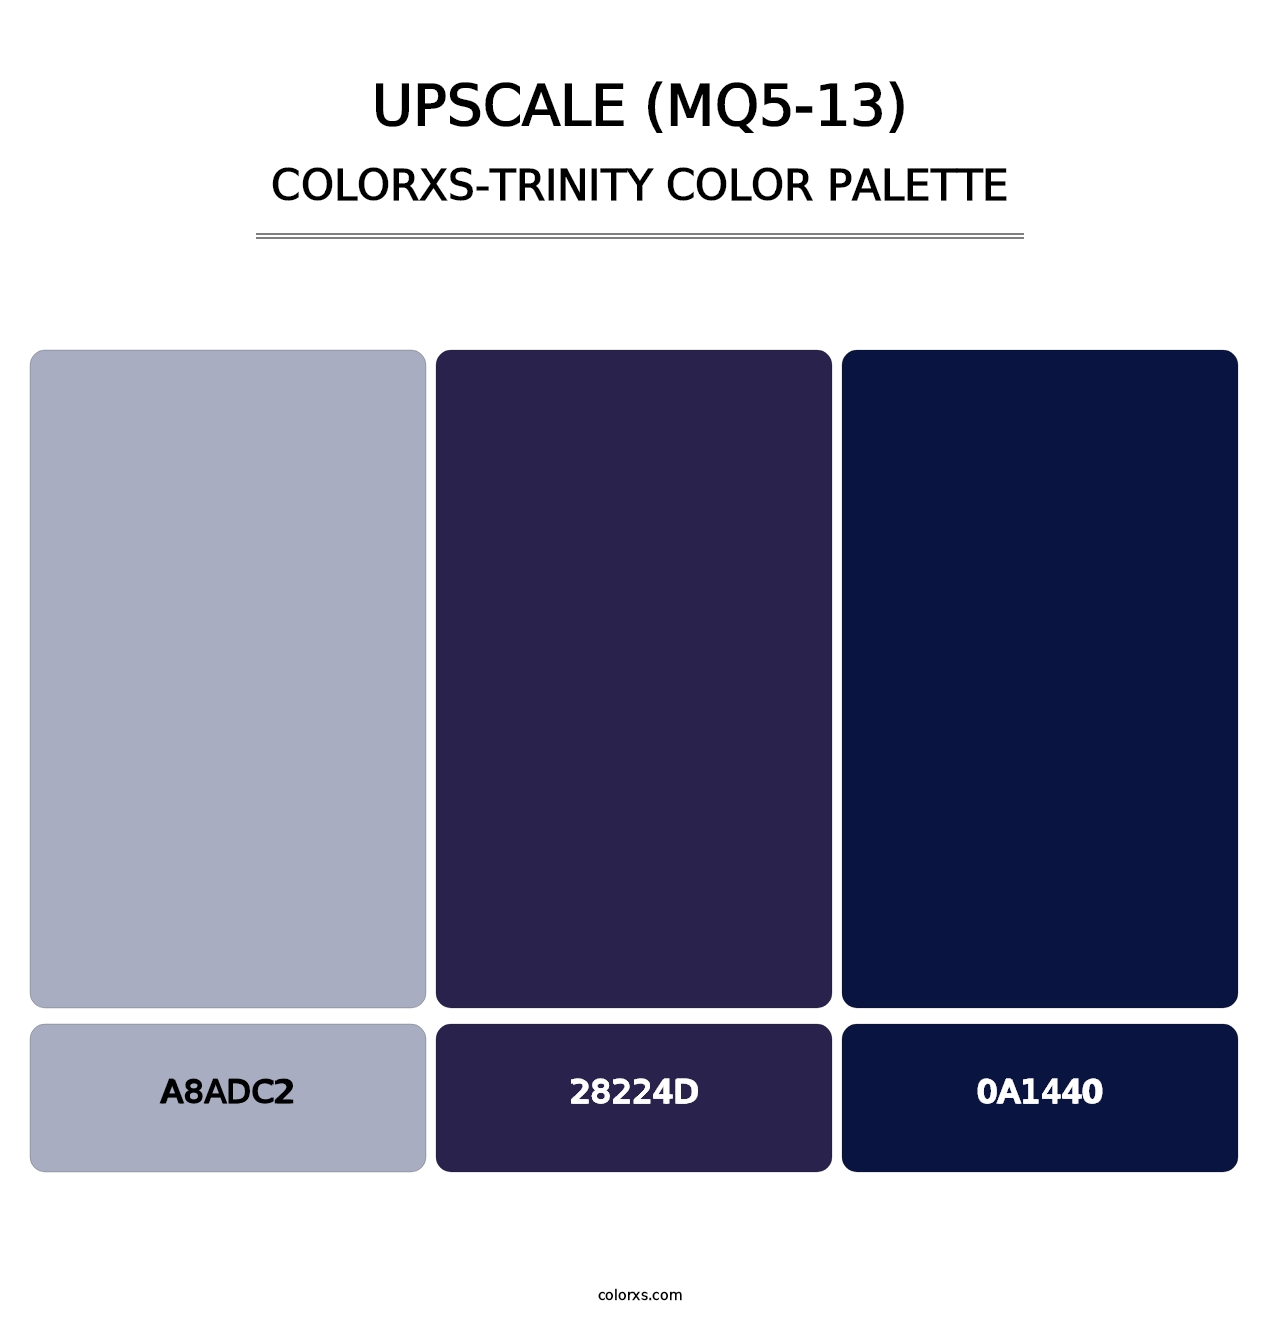 Upscale (MQ5-13) - Colorxs Trinity Palette